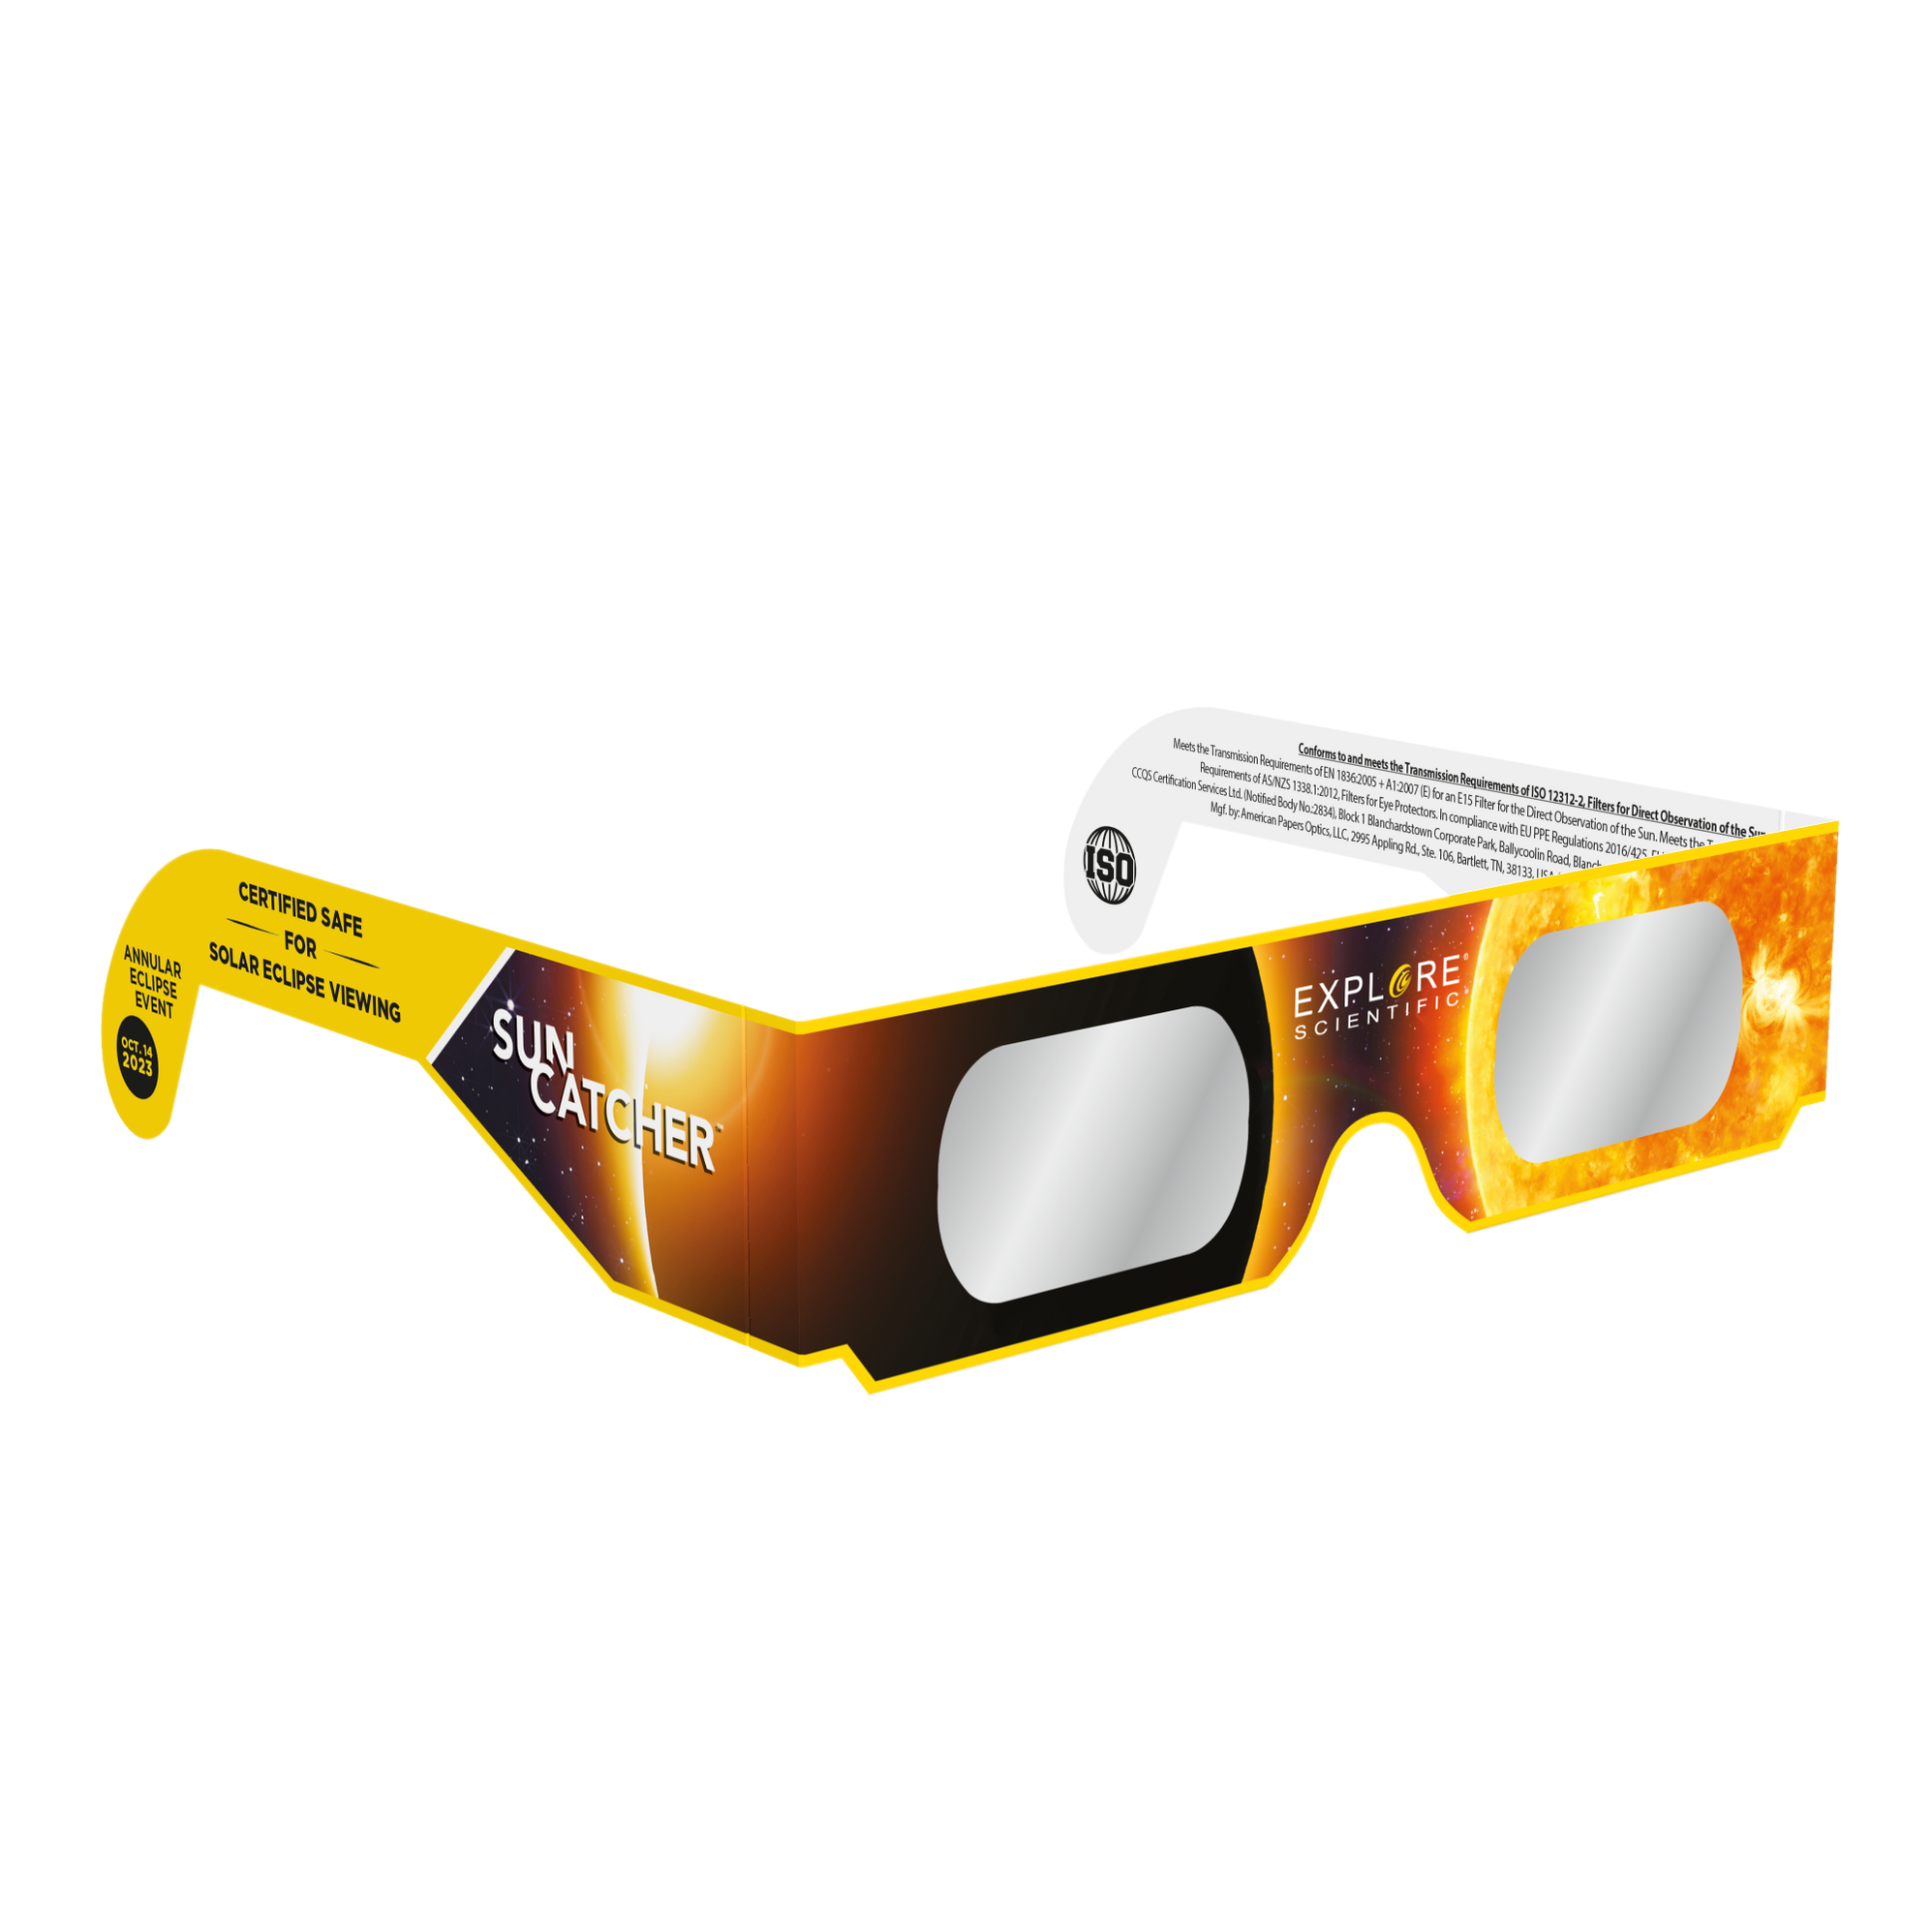 Sun Catcher Solar Eclipse Glasses (4Pack Assortment) — Explore Scientific